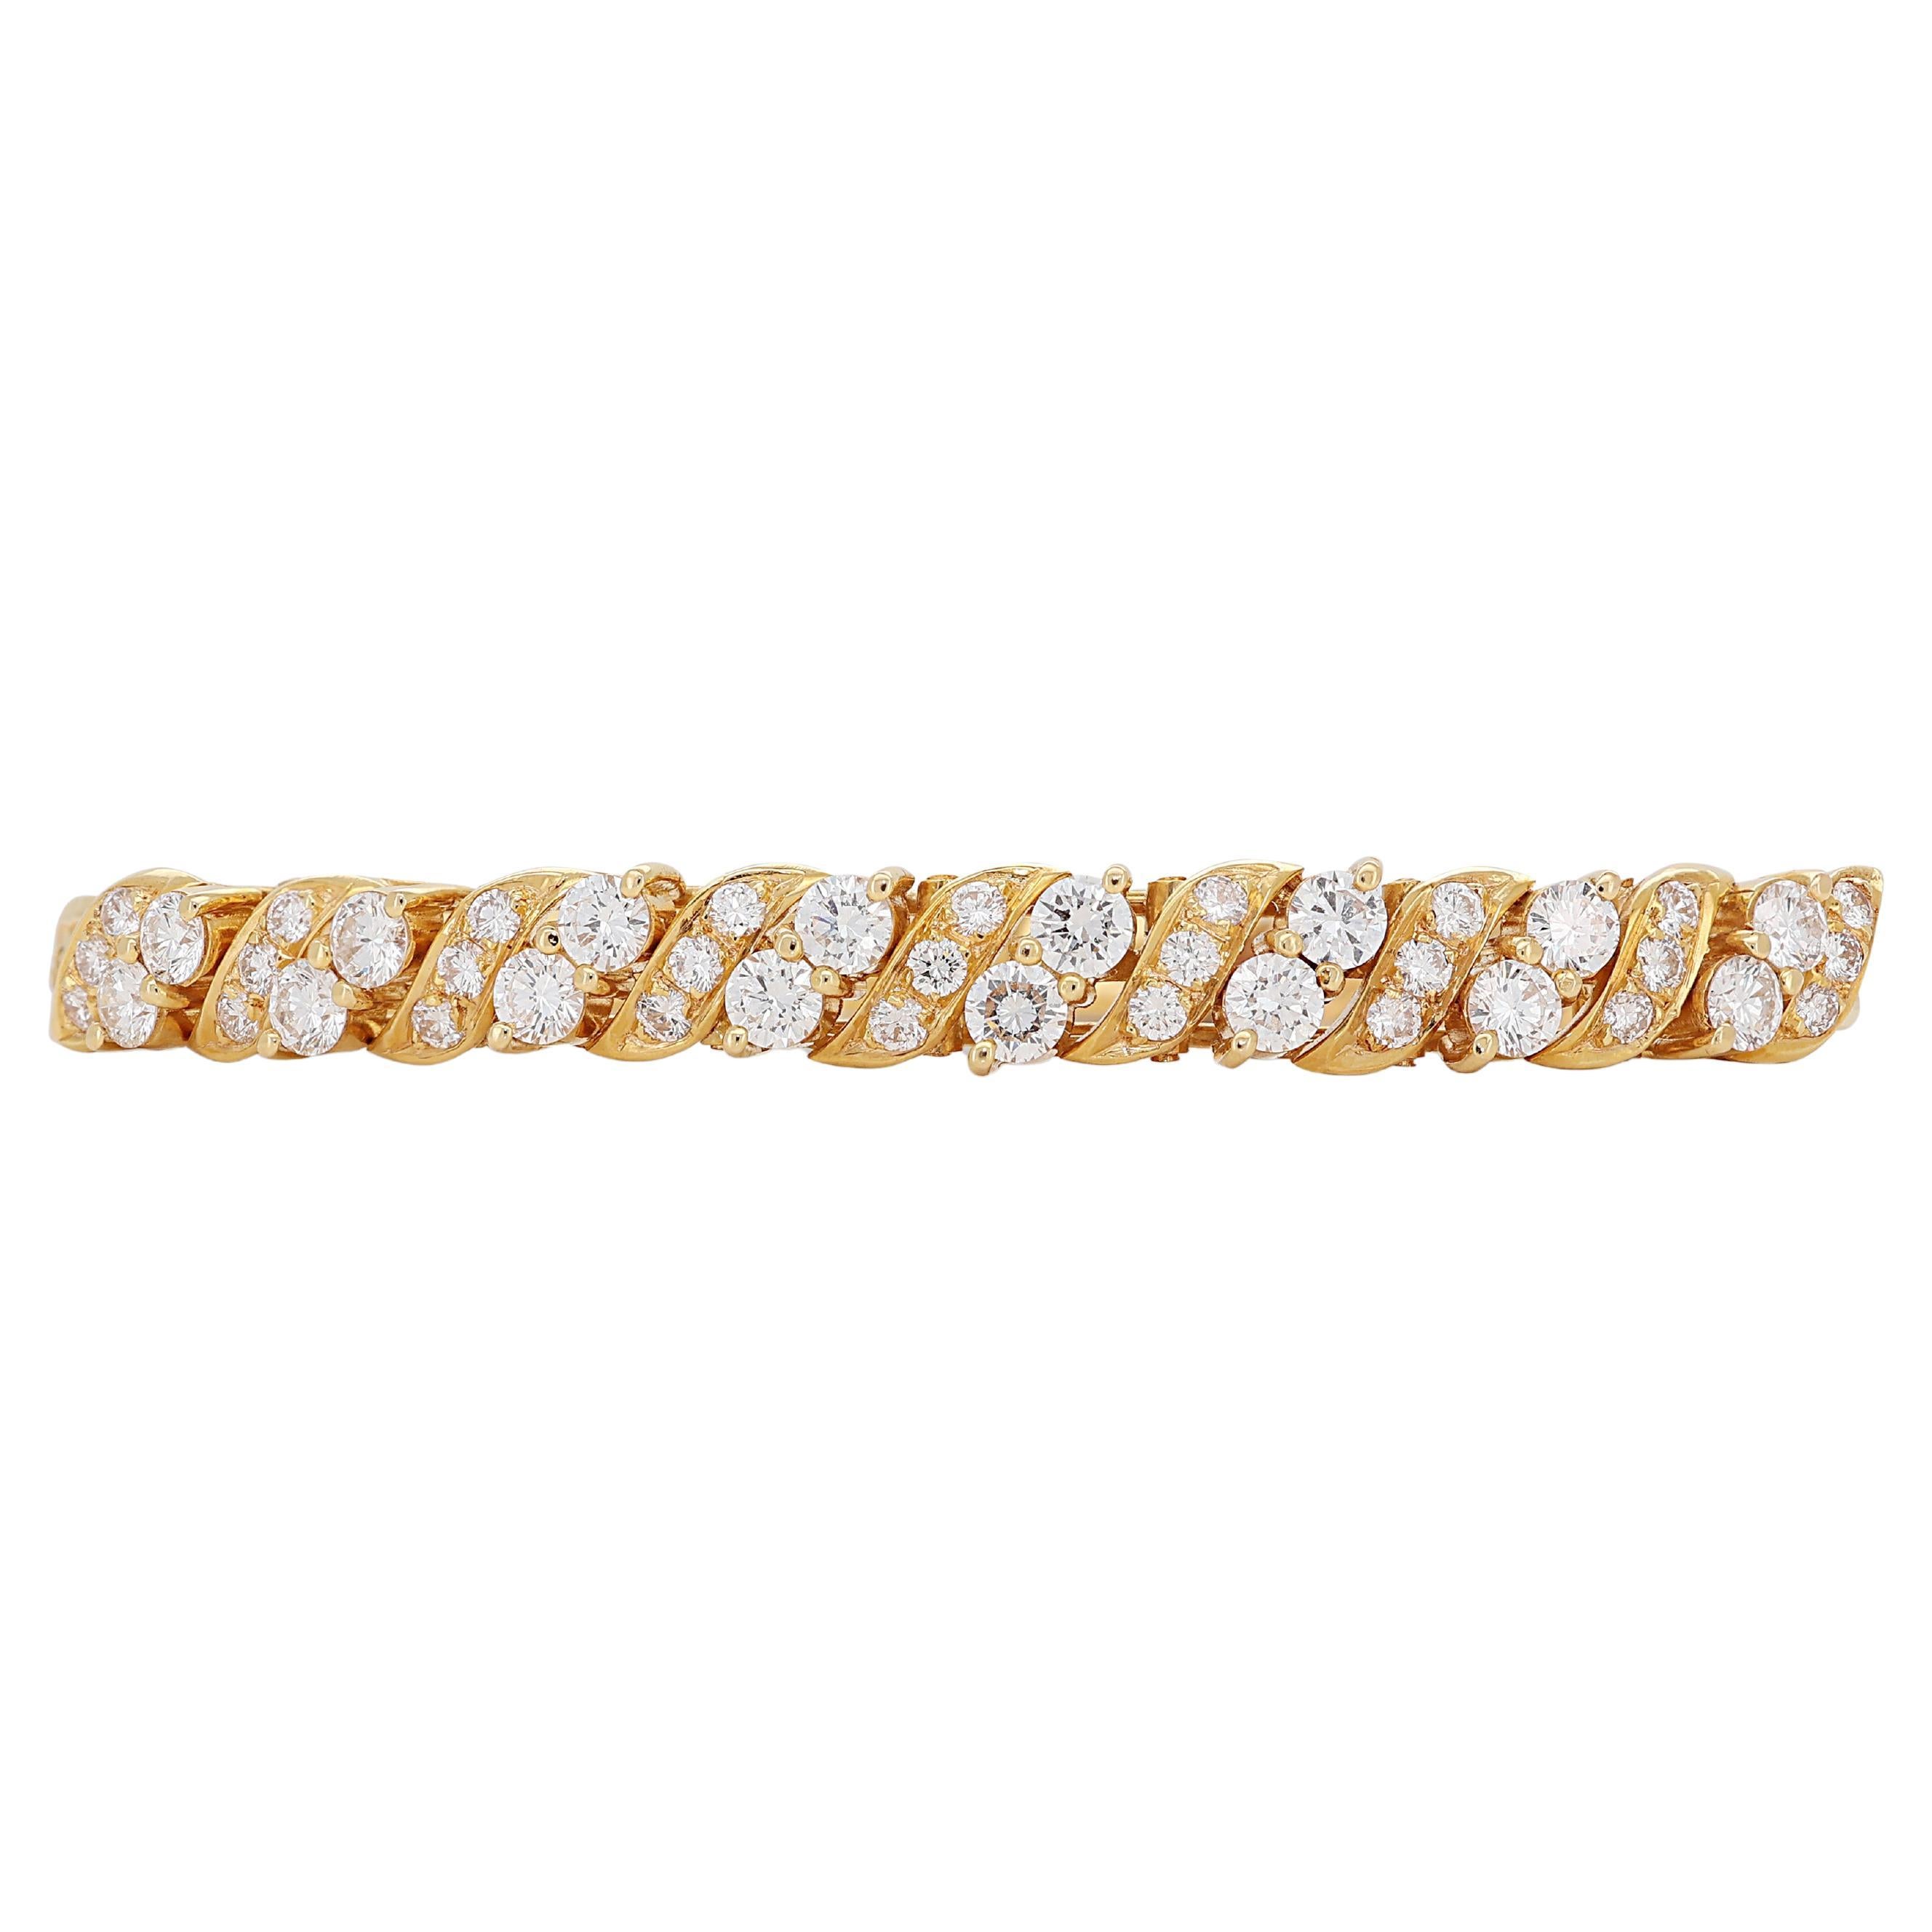 Sophisticated 1.87ct Diamonds Bracelet in 20k Yellow Gold